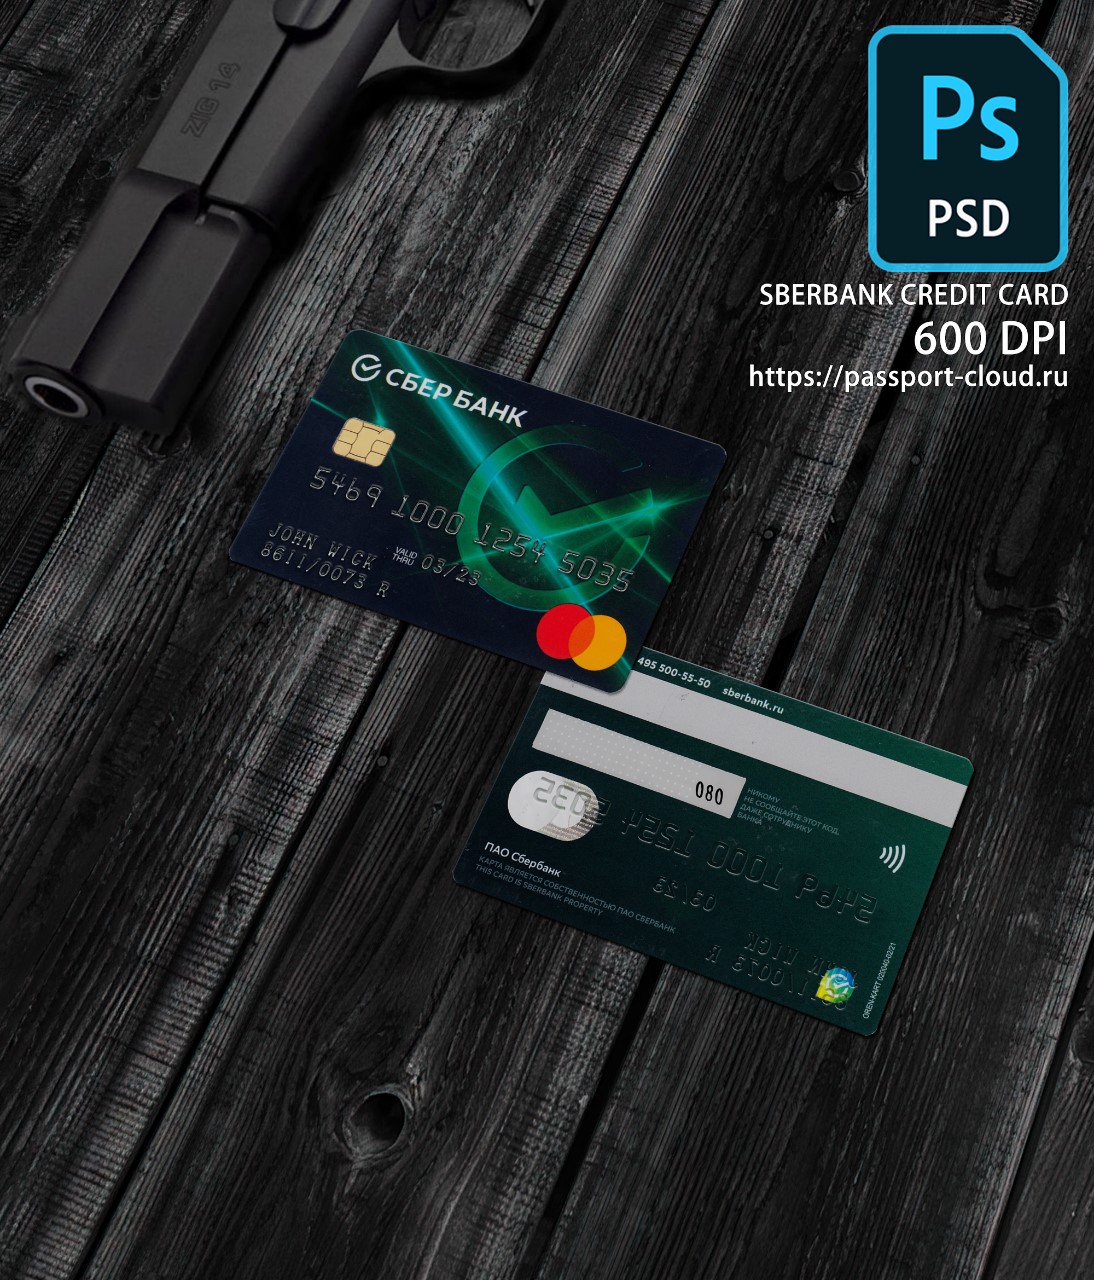 Sberbank Credit Card PSD1